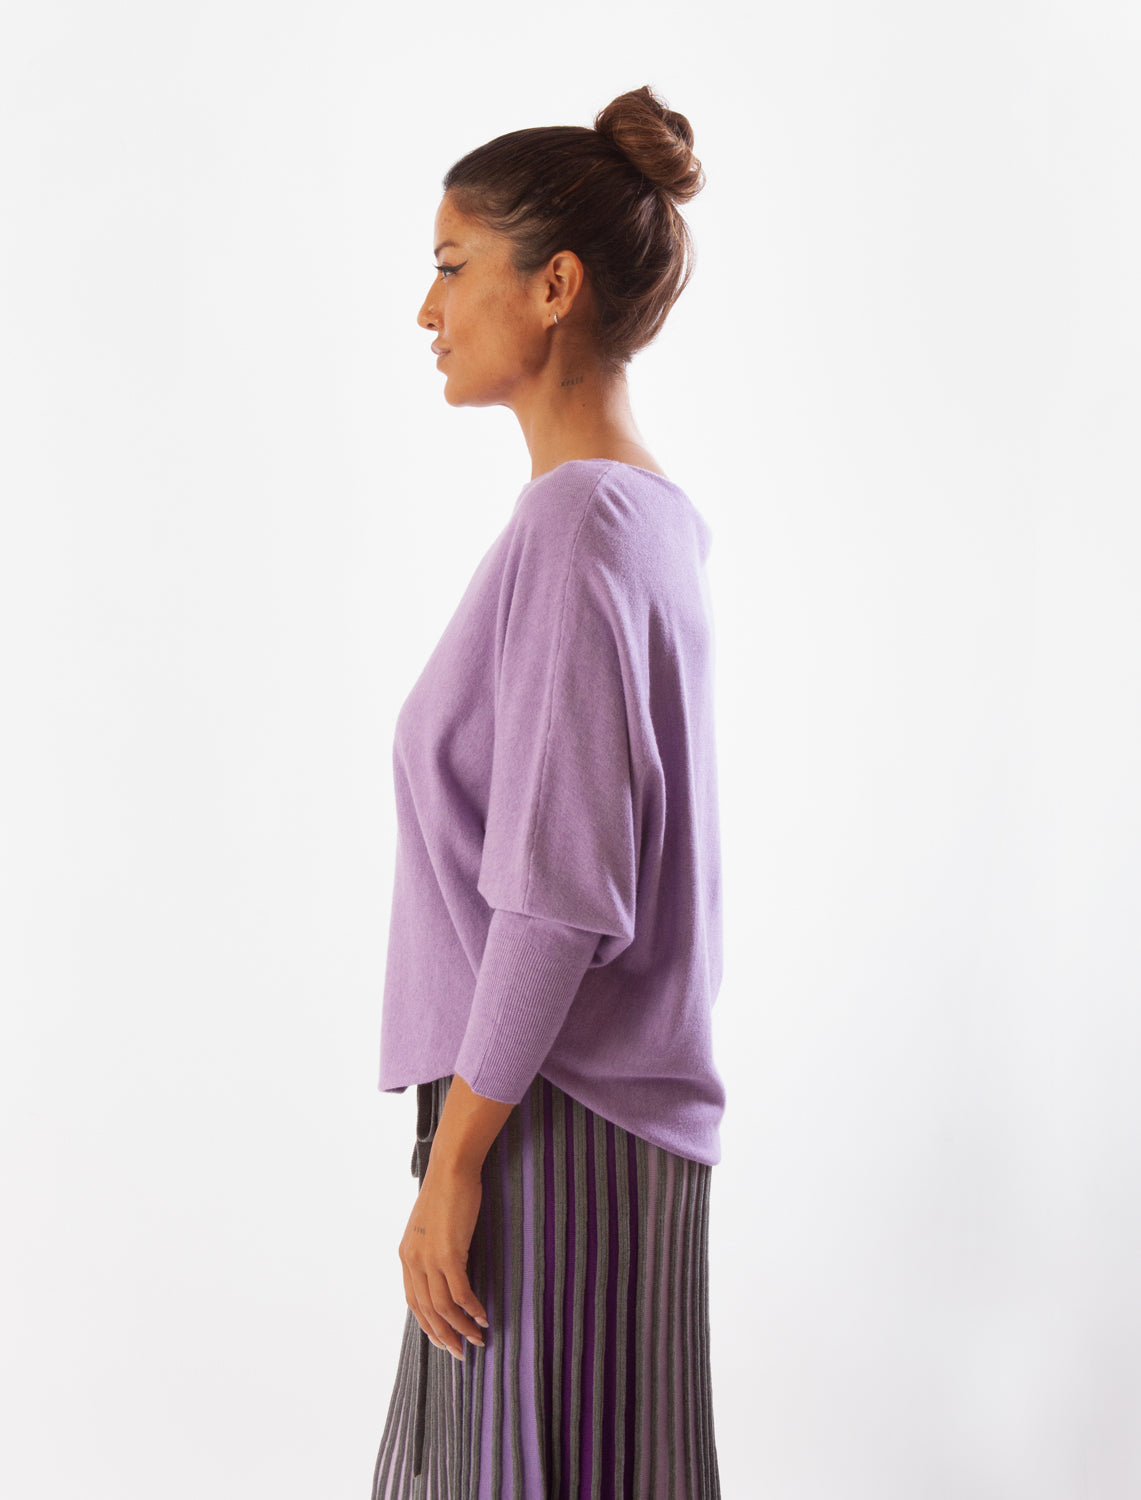 Lavender Thin Waverly Sweater